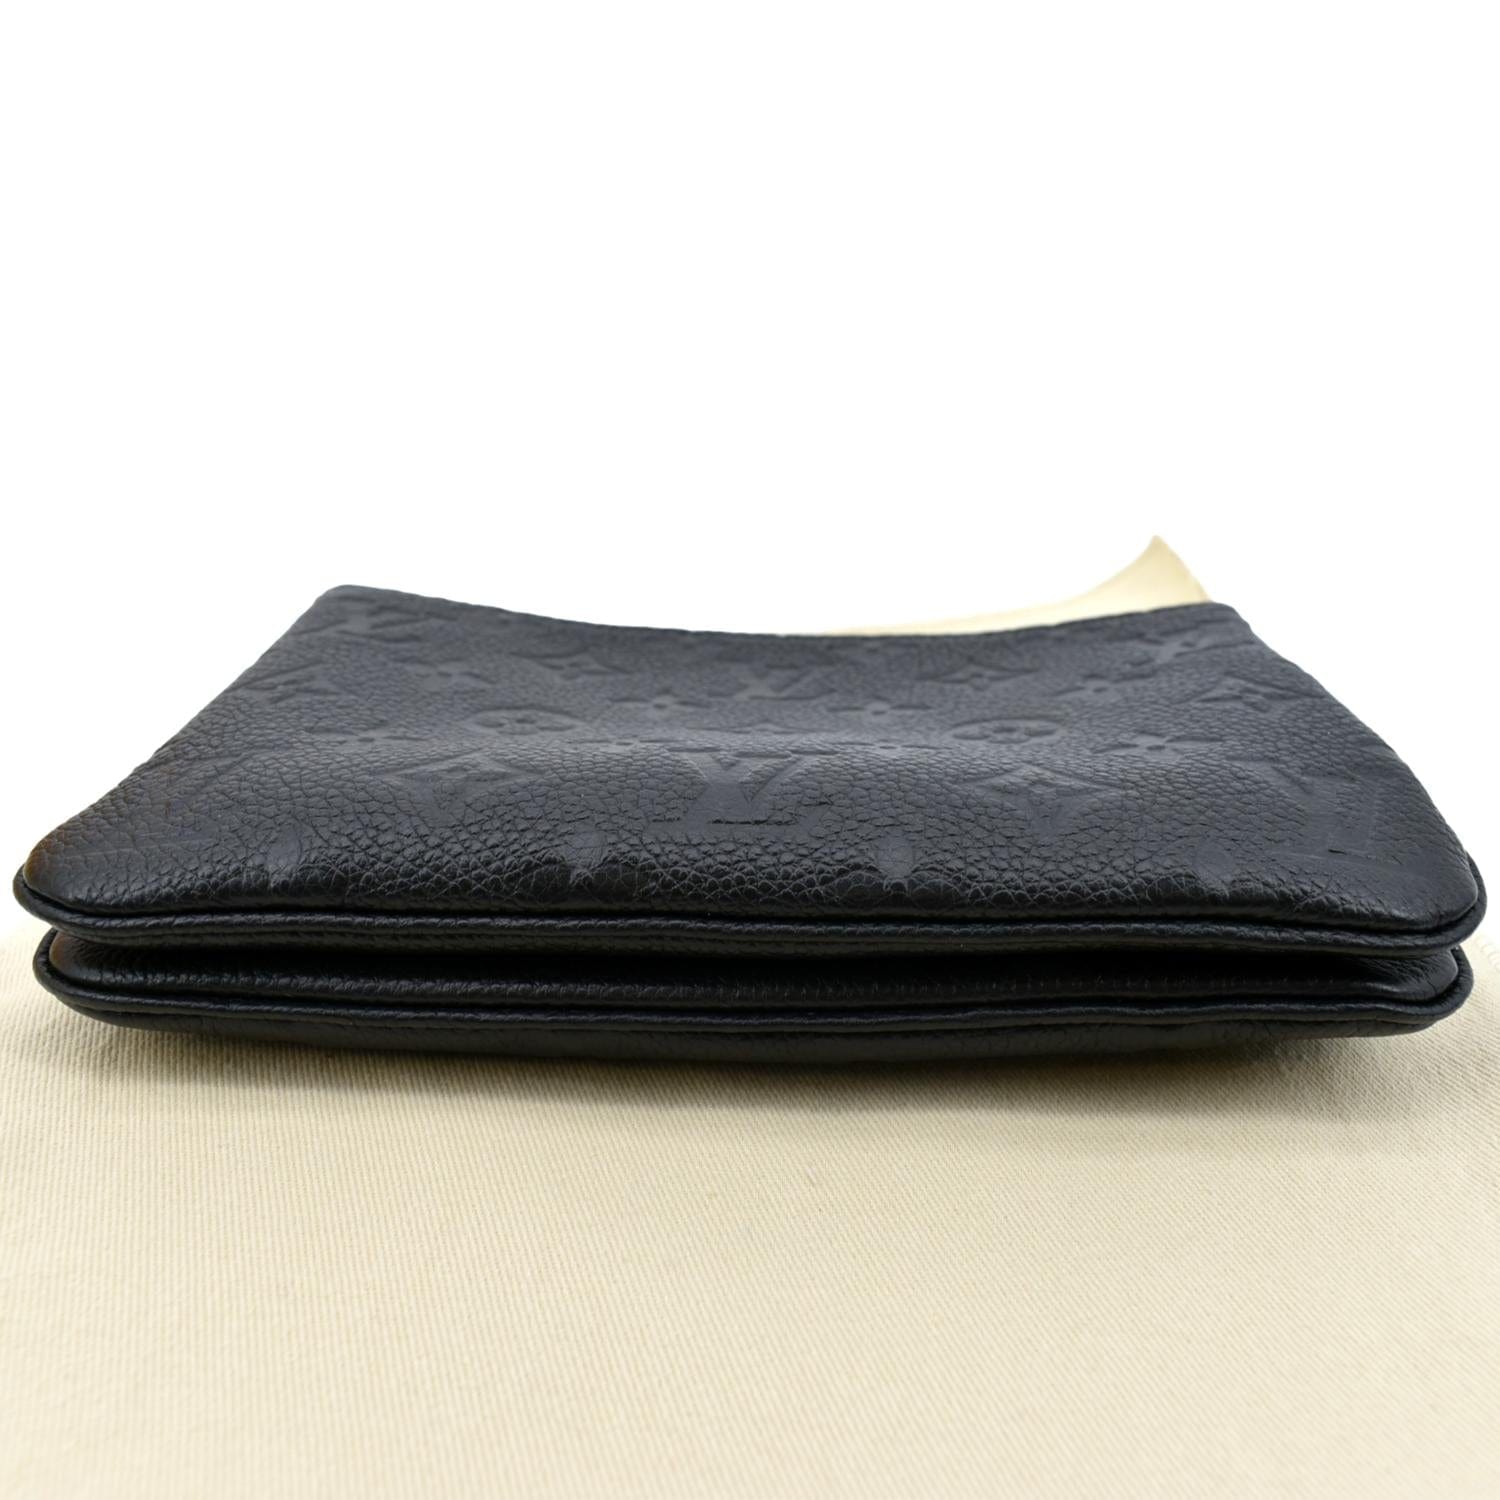 Louis Vuitton Monogram Empreinte Twice - Black Crossbody Bags